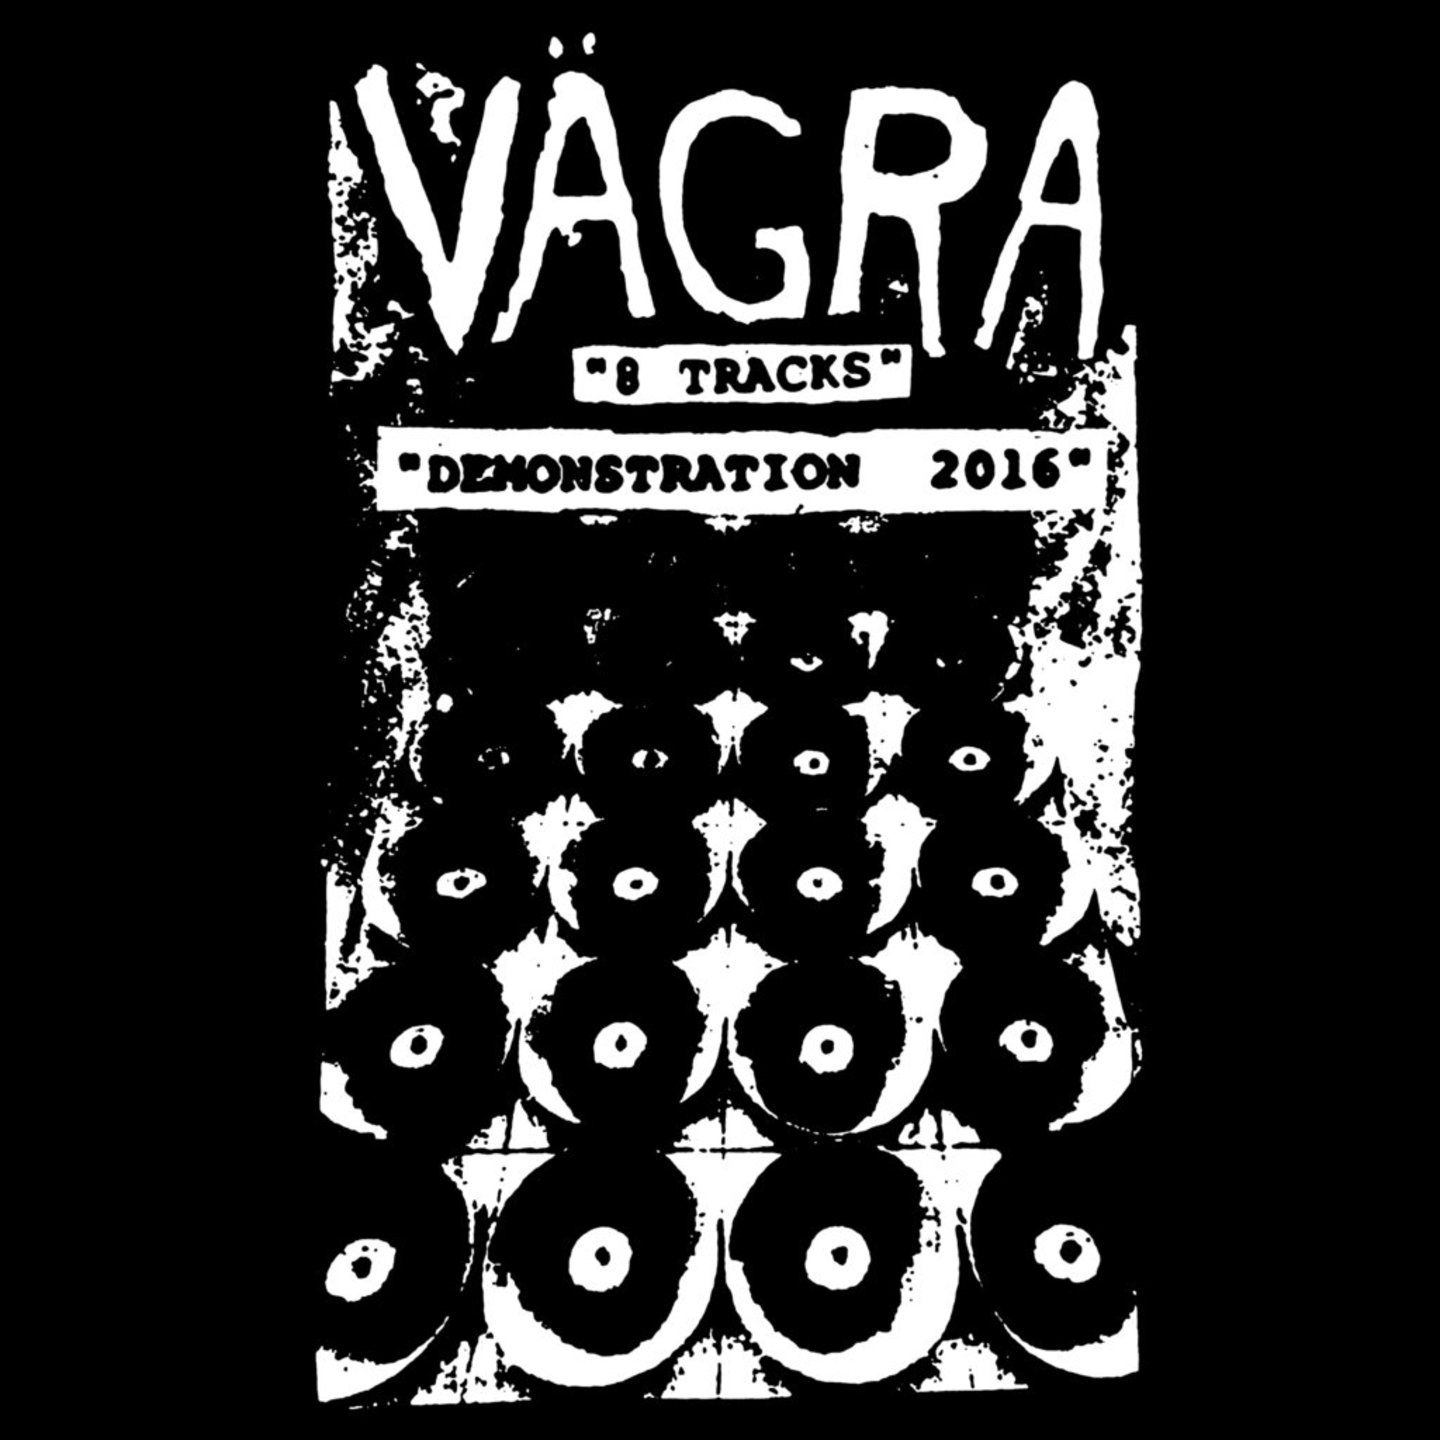 VAGRA - Demonstration 2016 12